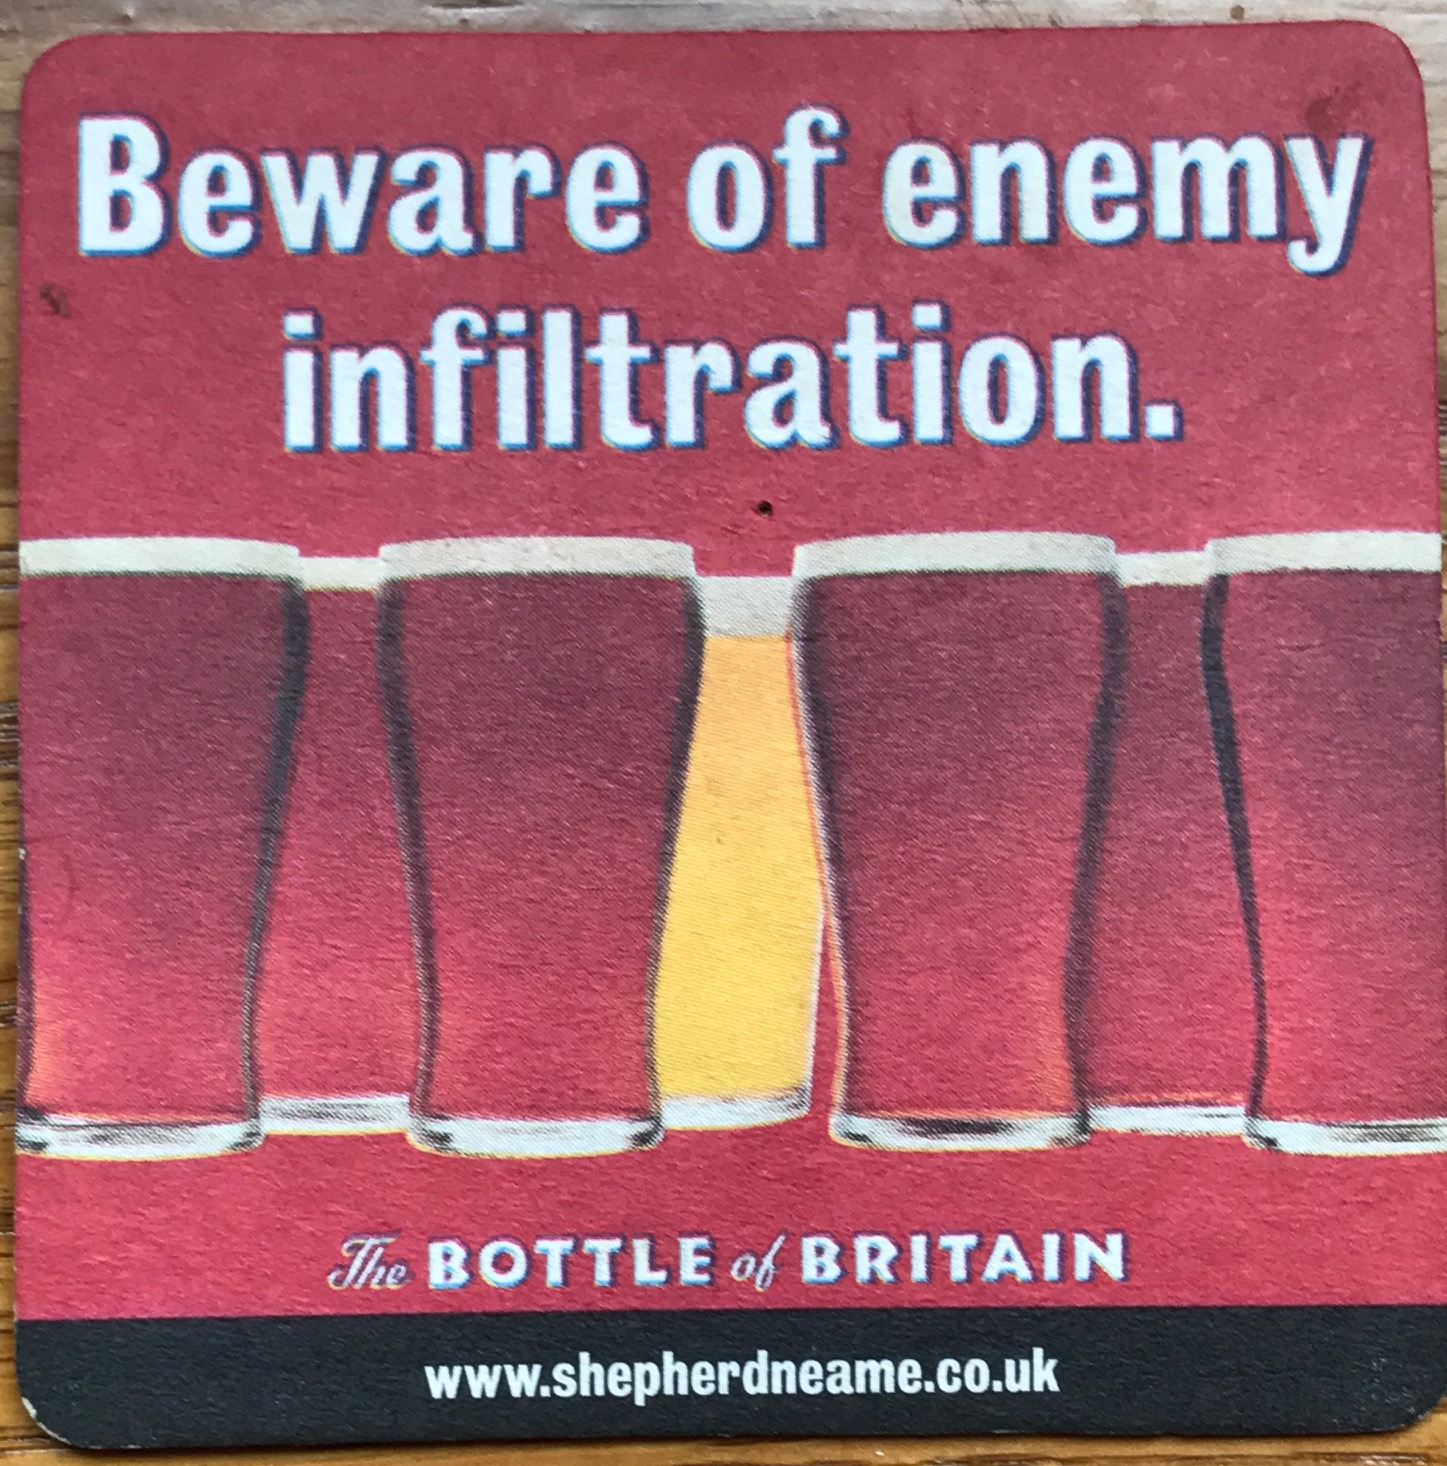 Heatwave: Beware of enemy infiltration. The Bottle of Britain.